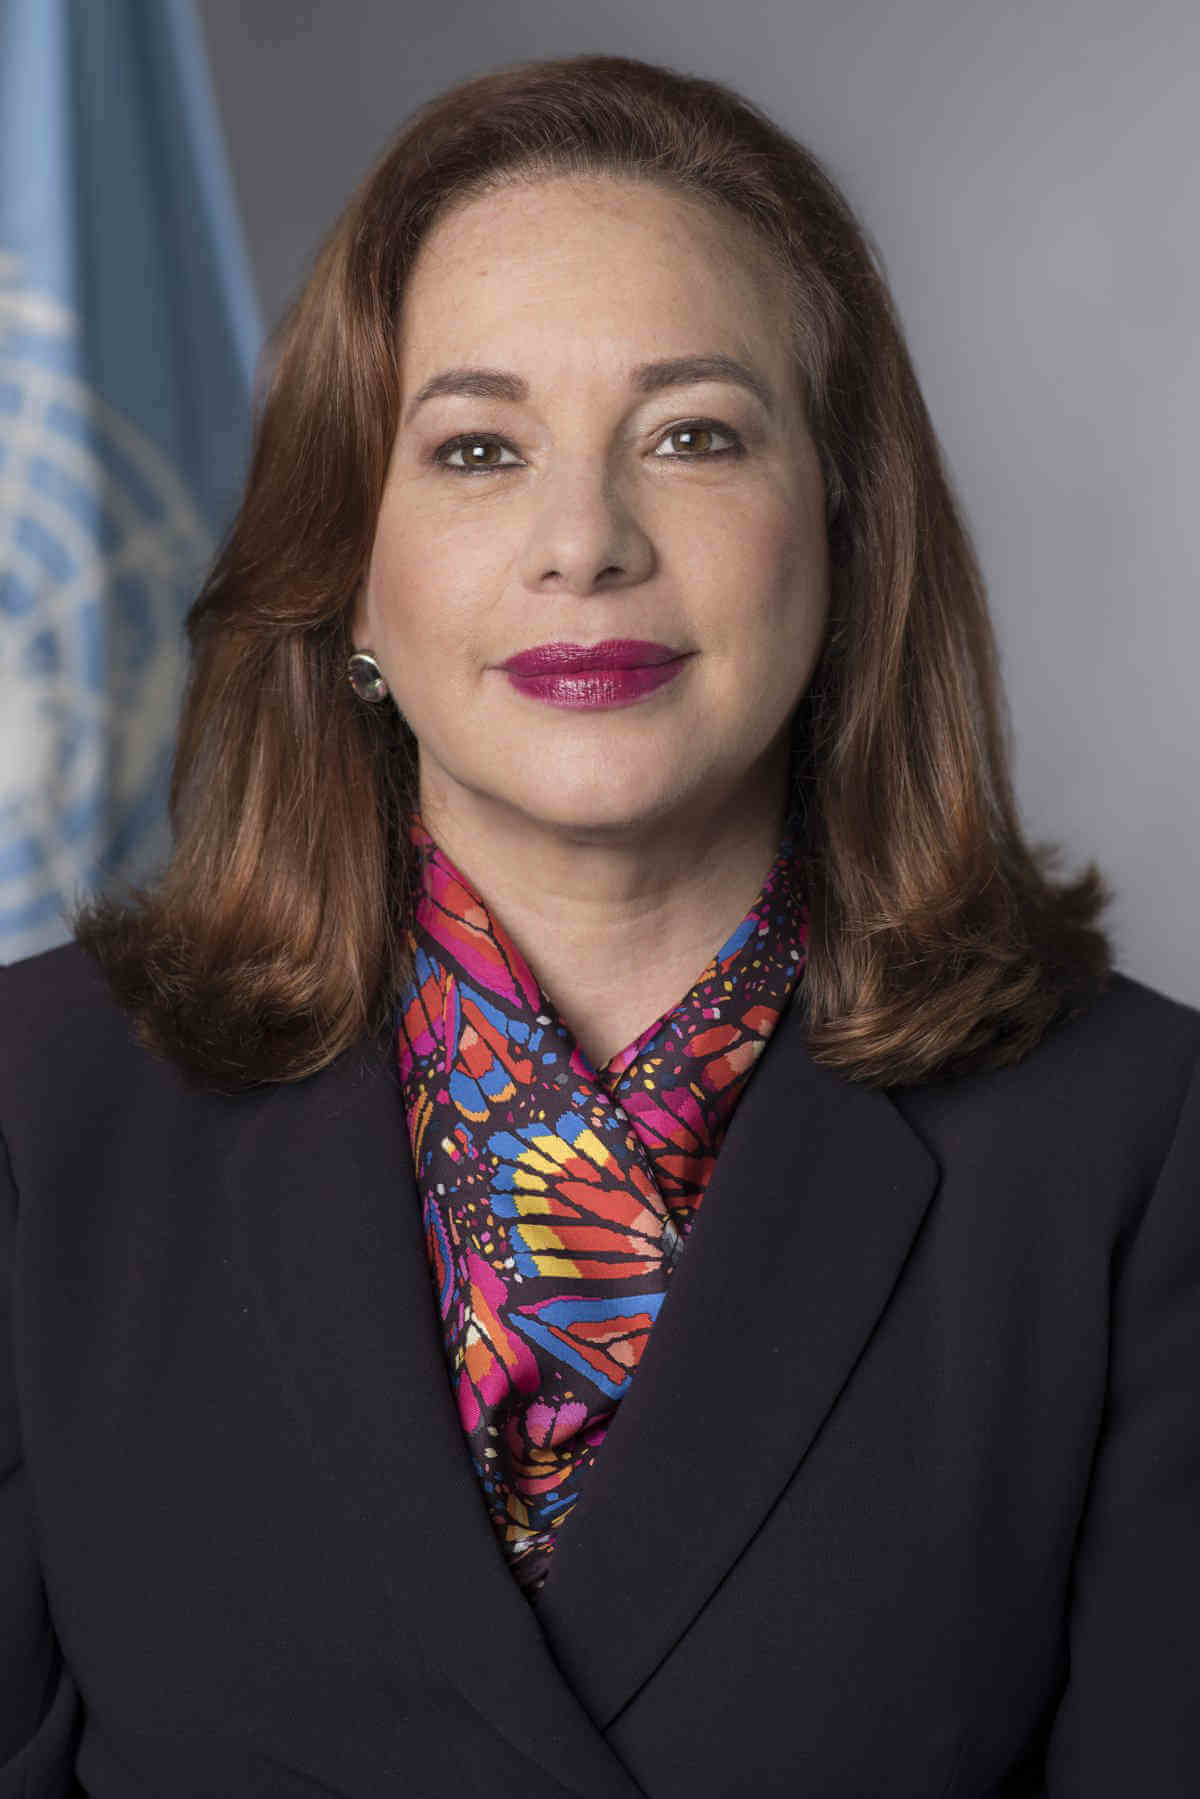 Antigua, SVG nominate Ecuadorian diplomat for OAS secretary general